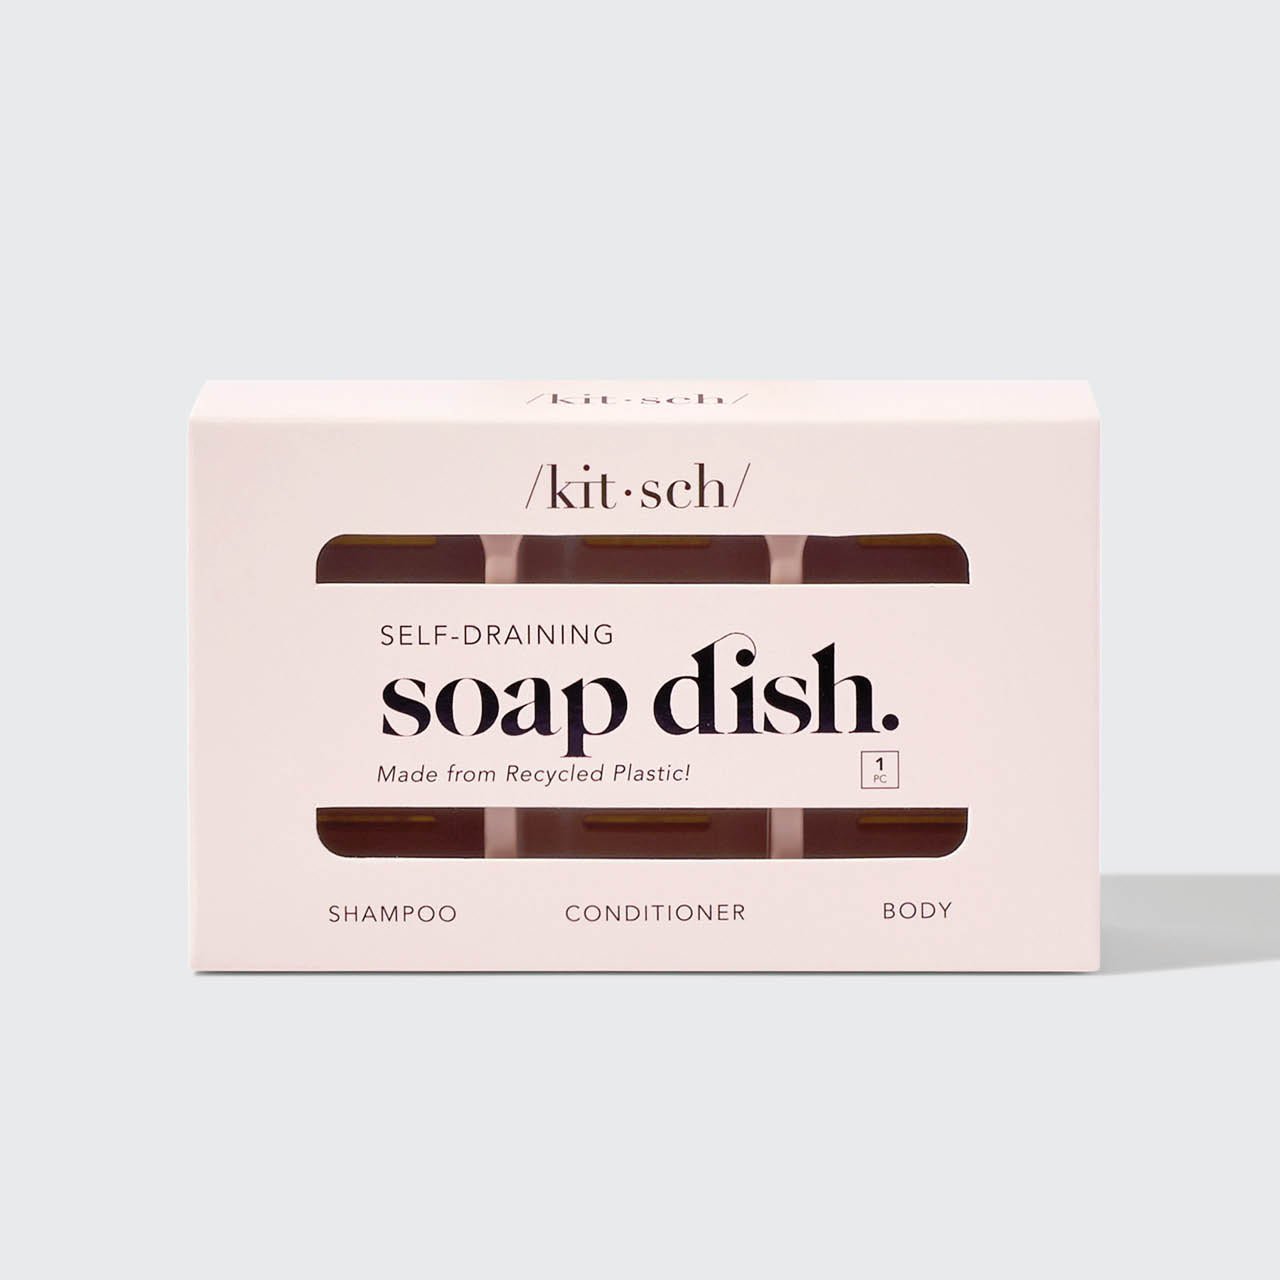 Self-Draining Soap Dish